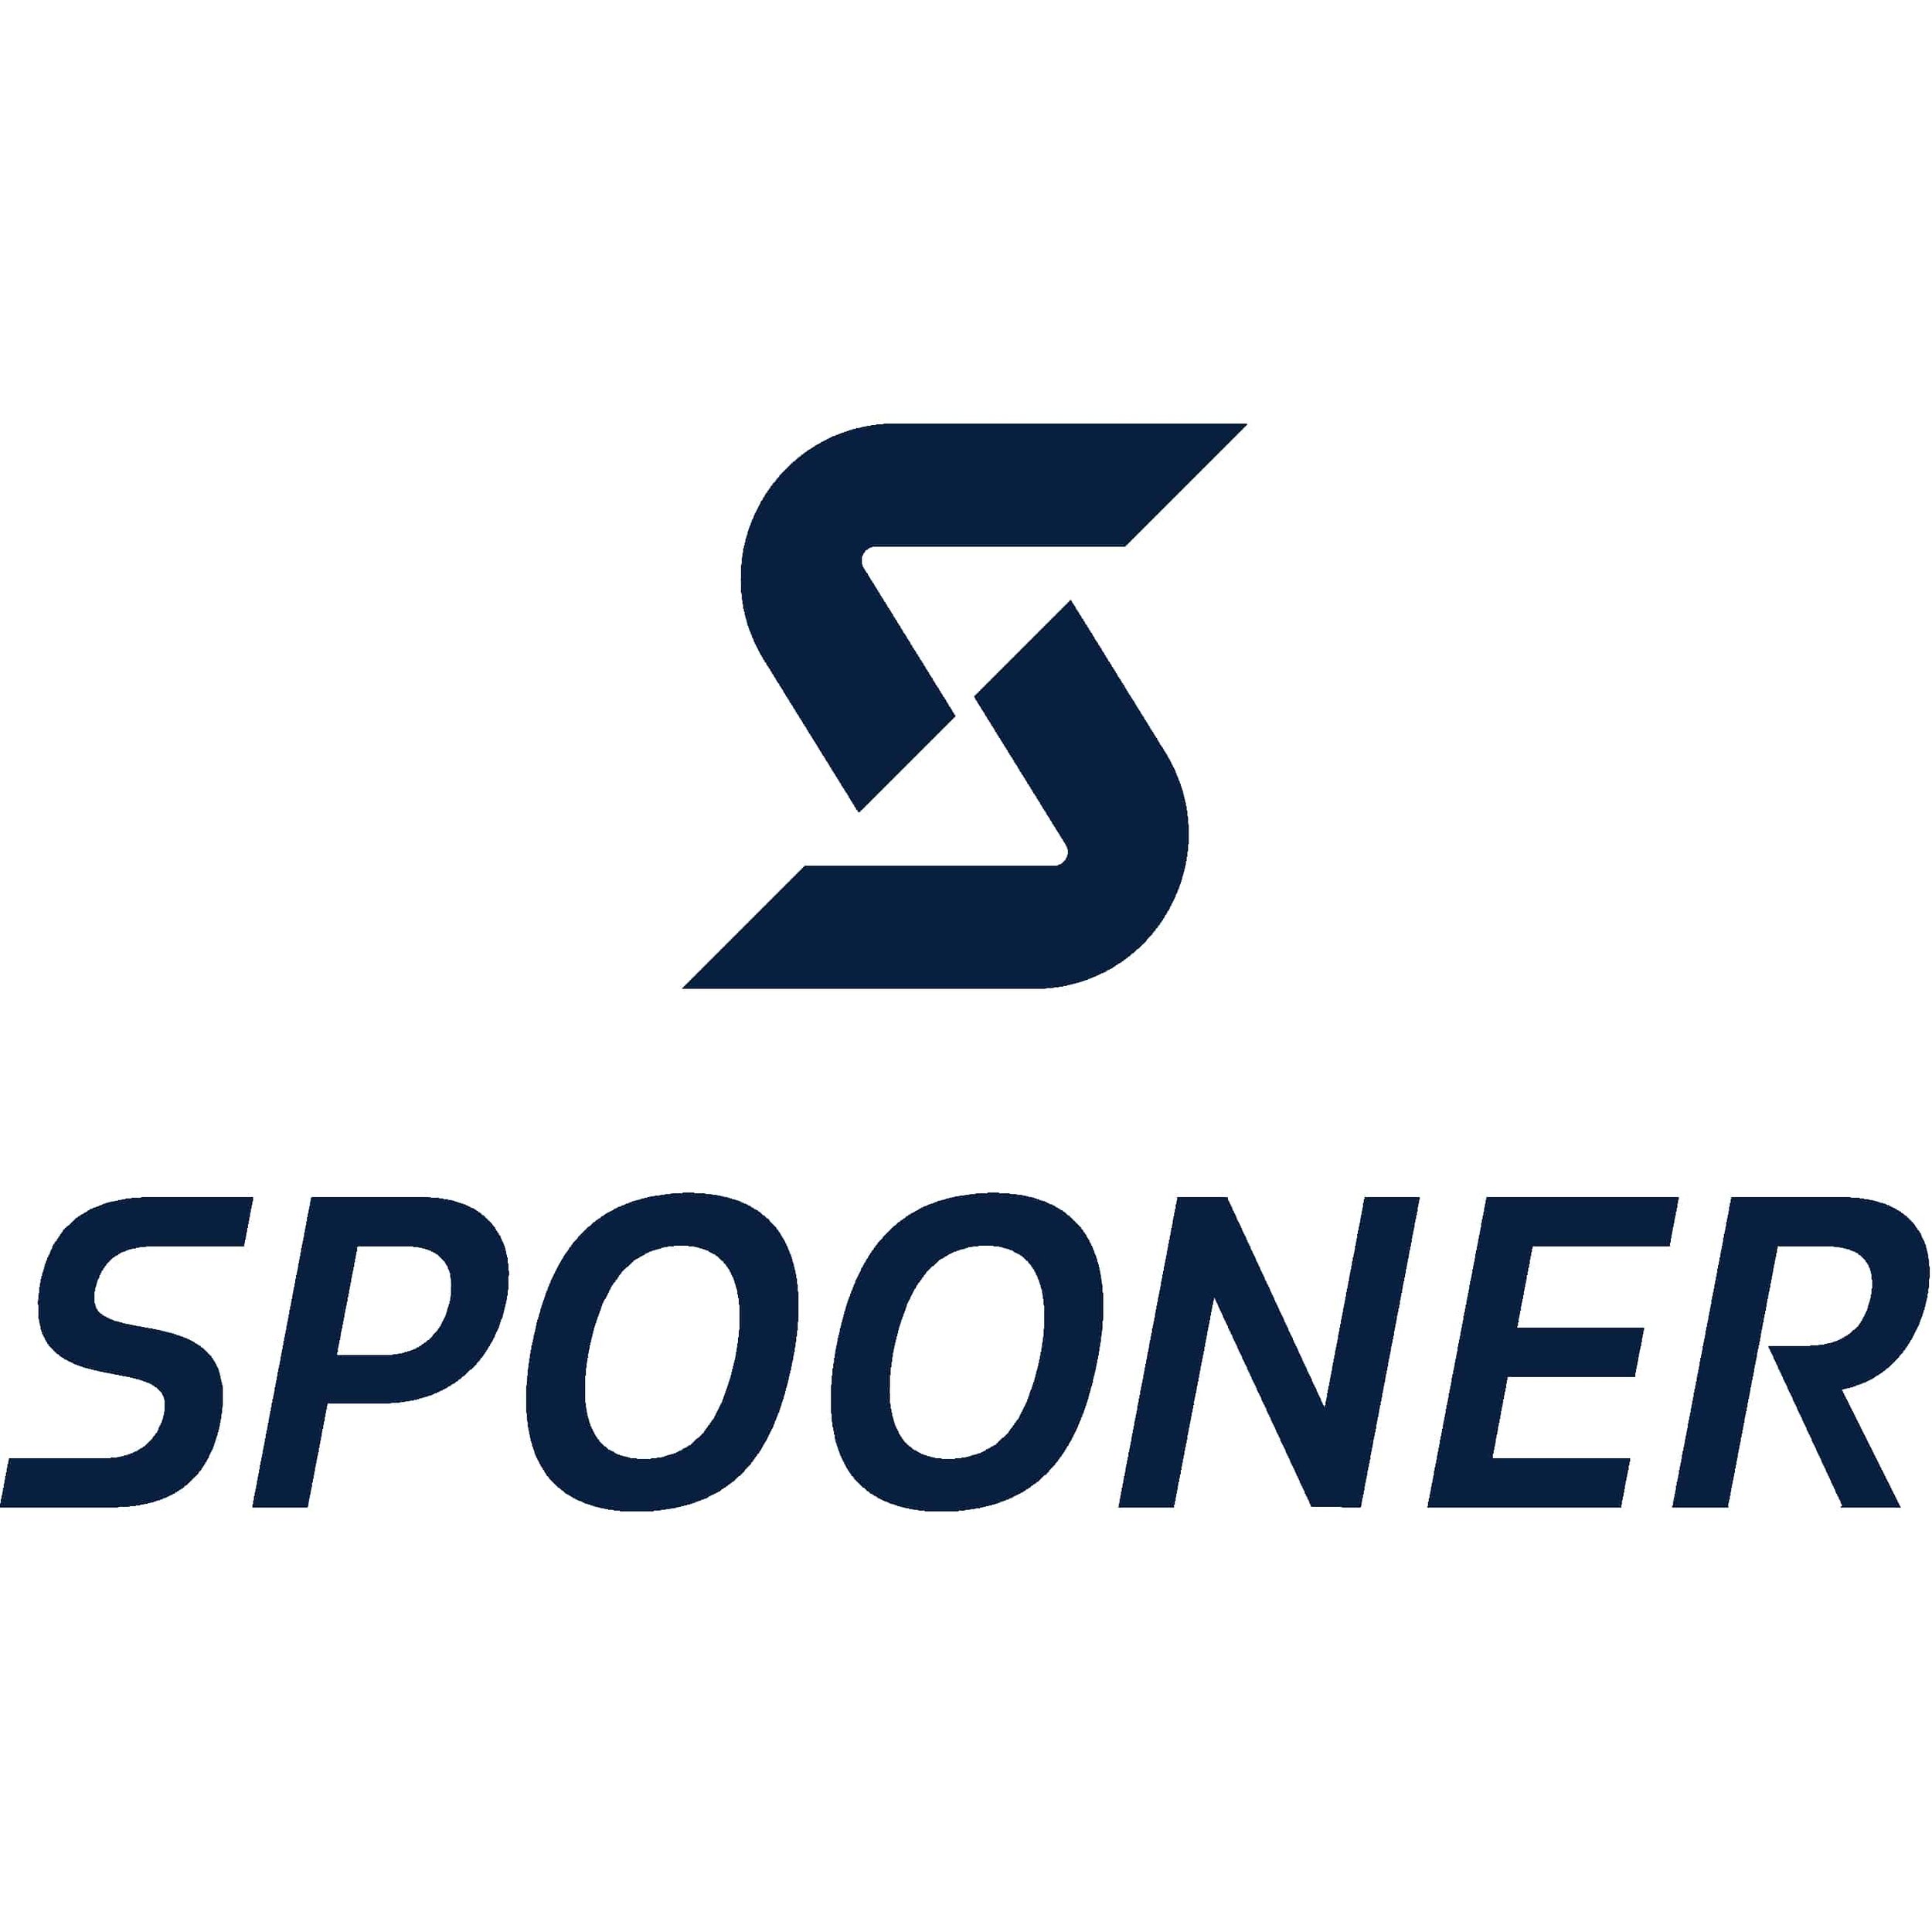 Spooner_Navy_Stacked-1.jpg